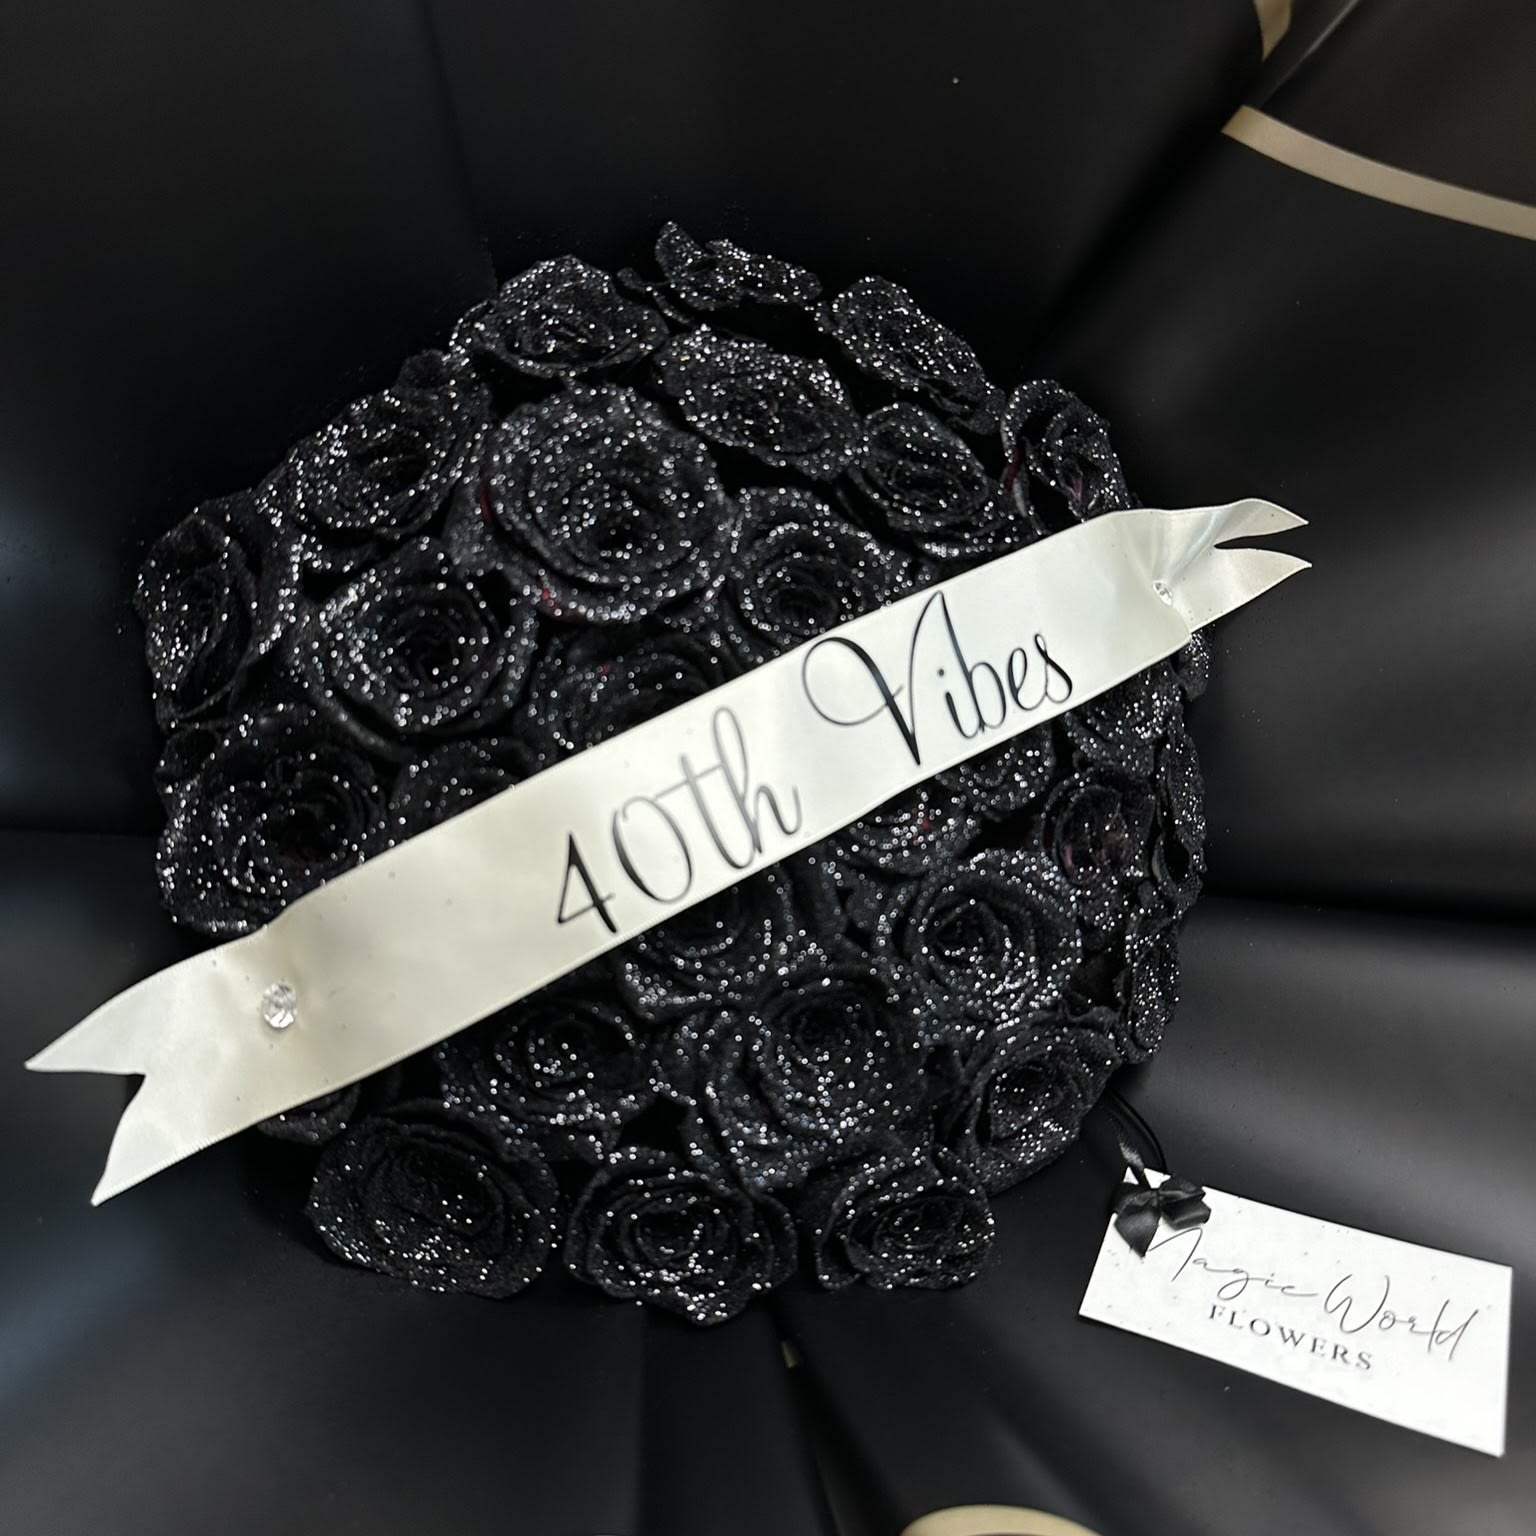 24 count black glitter roses 🖤 #roses #nycflorist #glitterroses  #nycflowers #nyc #contentcreator #influencer